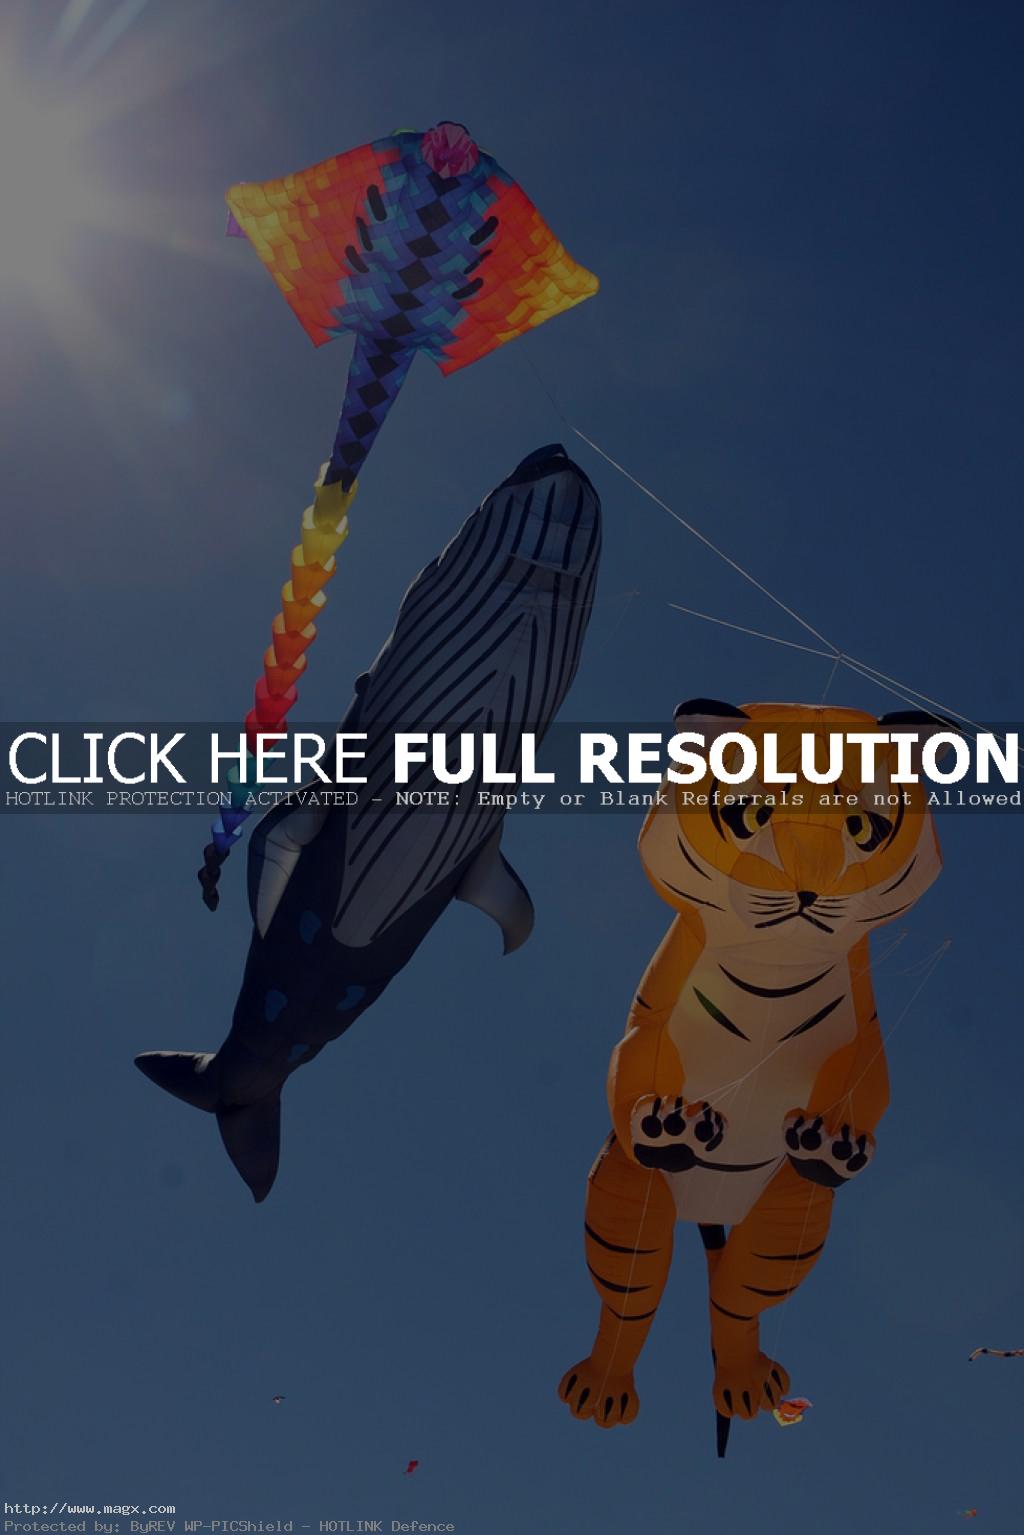 kite flying Festival of the Winds, Sydney